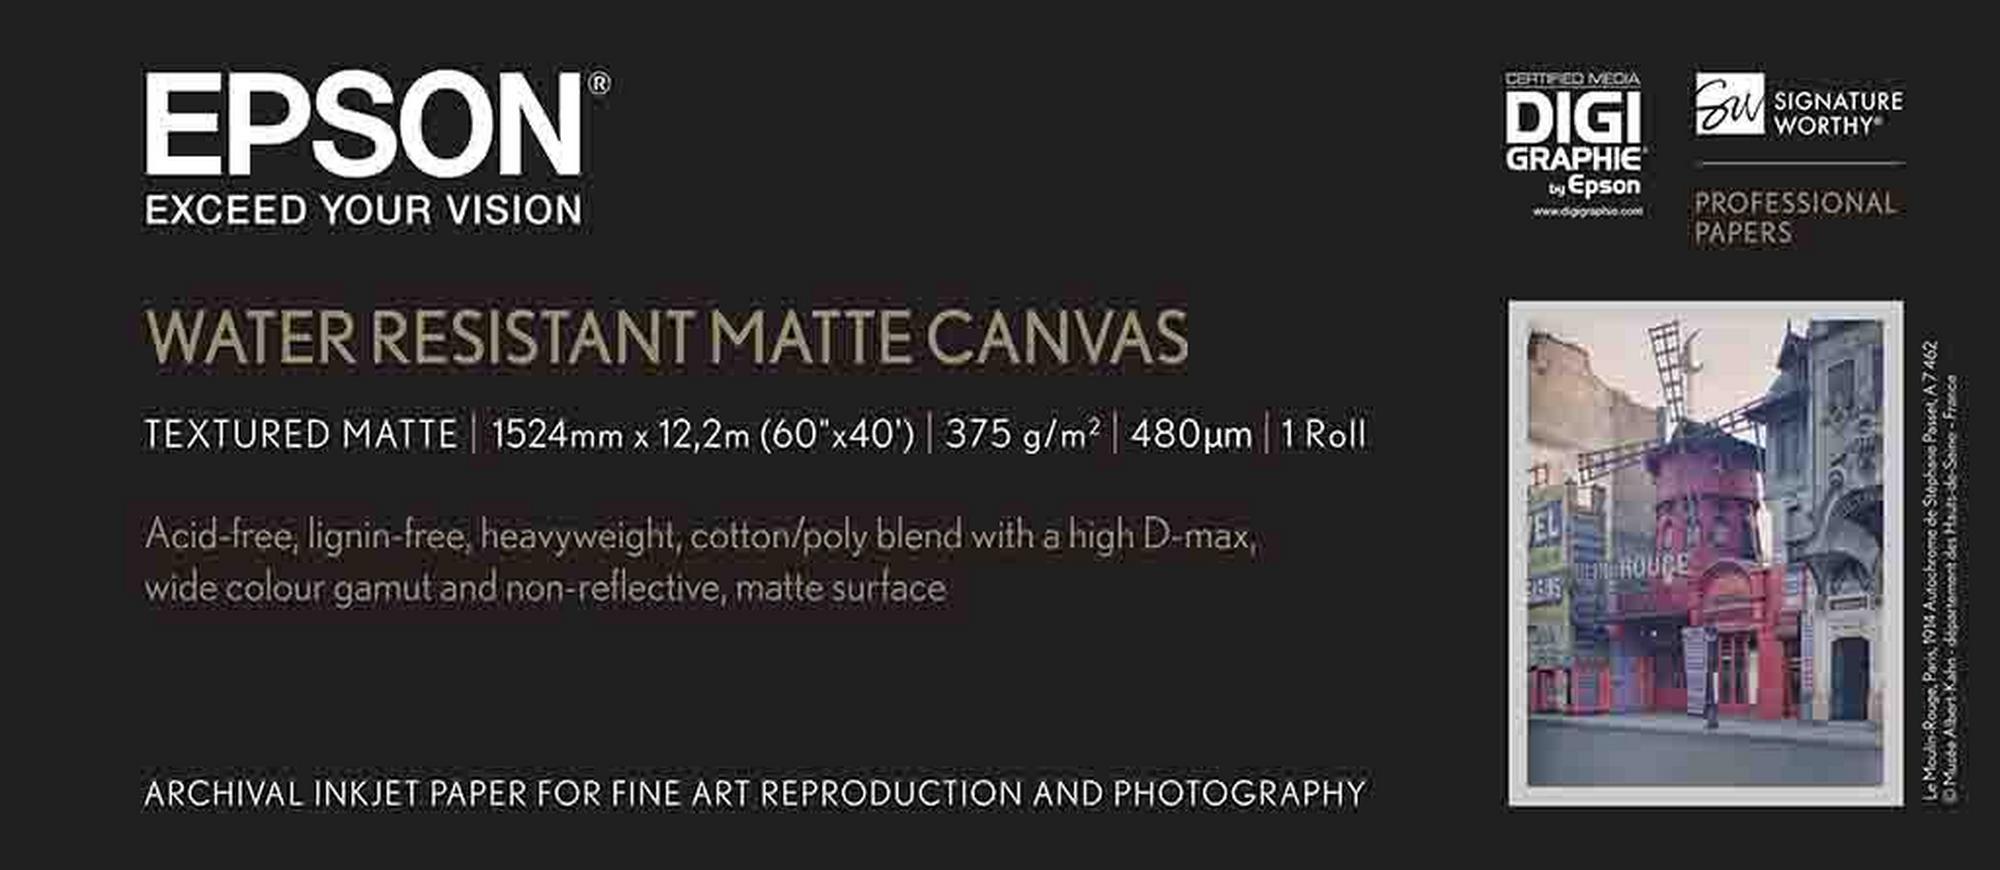 Epson Water Resistant Matte Canvas Roll, 60" x 12.2m, 375g/m²